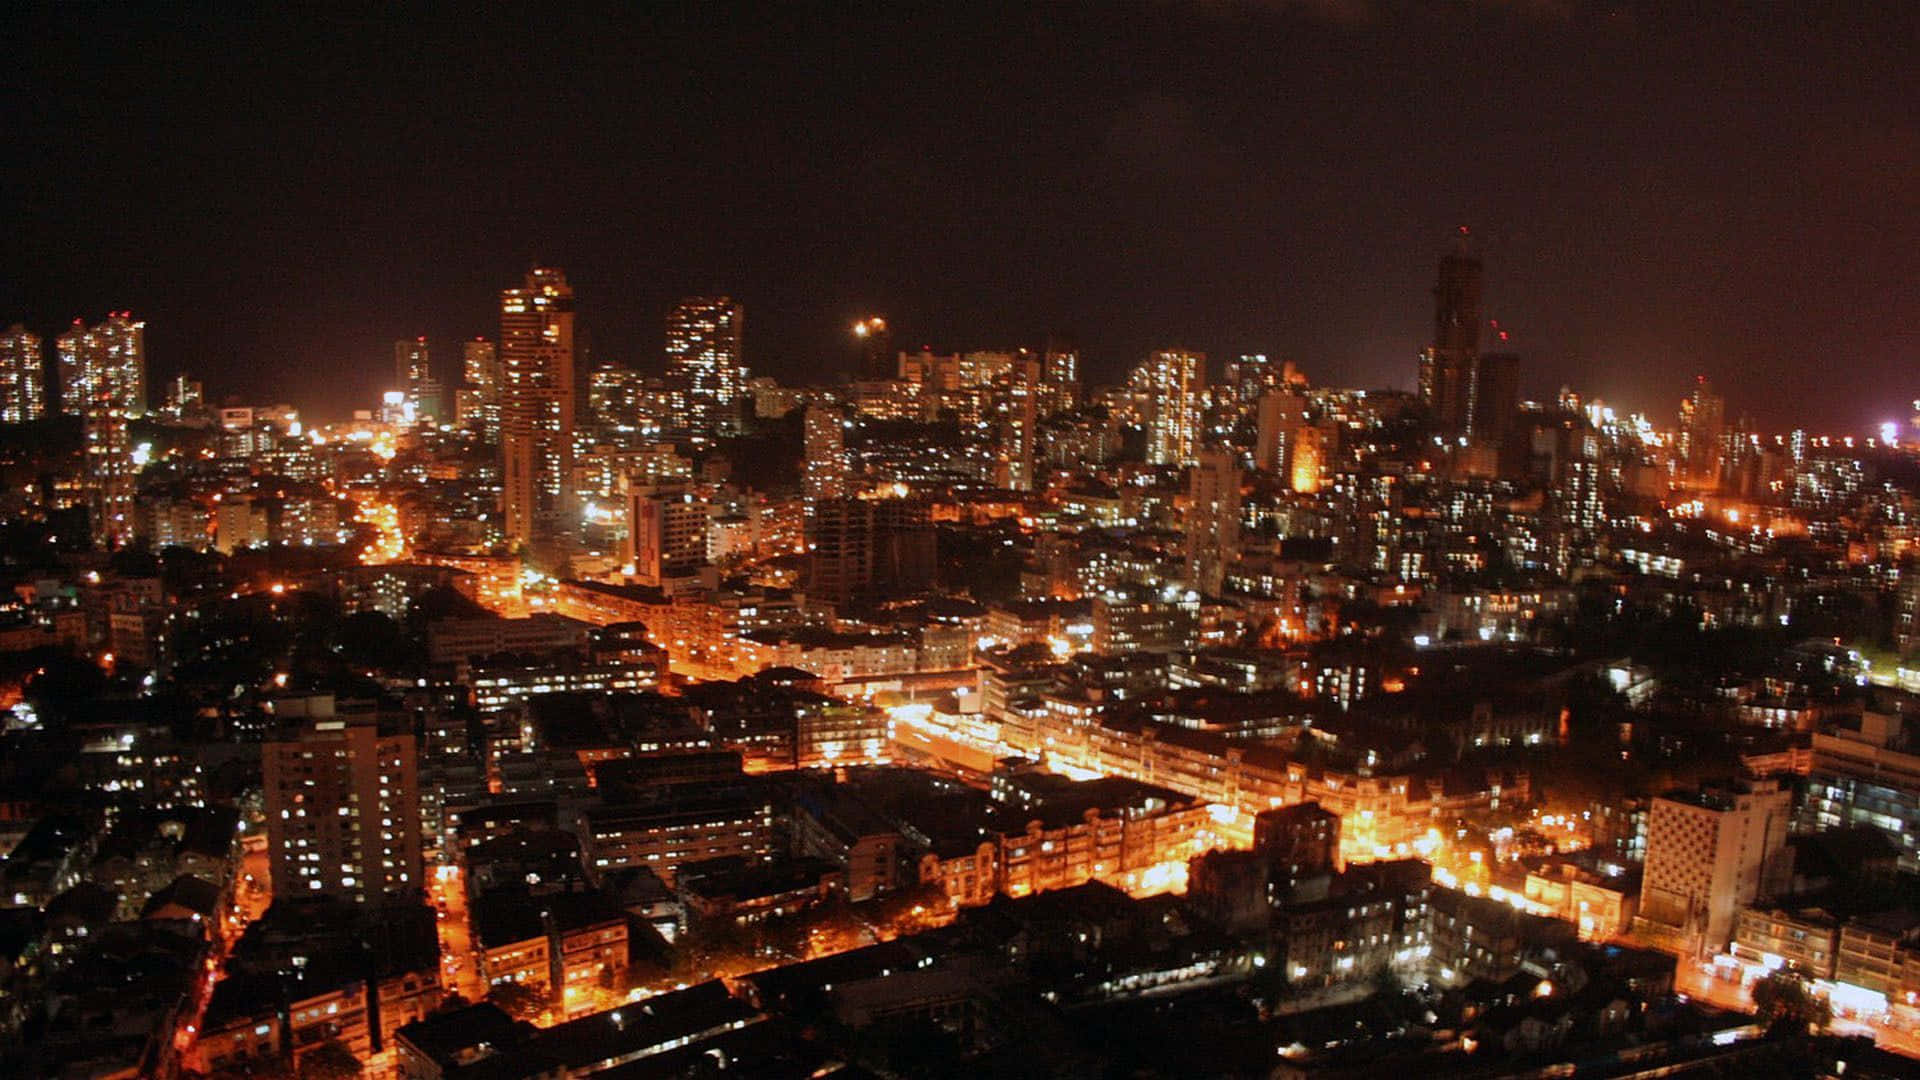 Impresionantehorizonte De Mumbai Al Anochecer